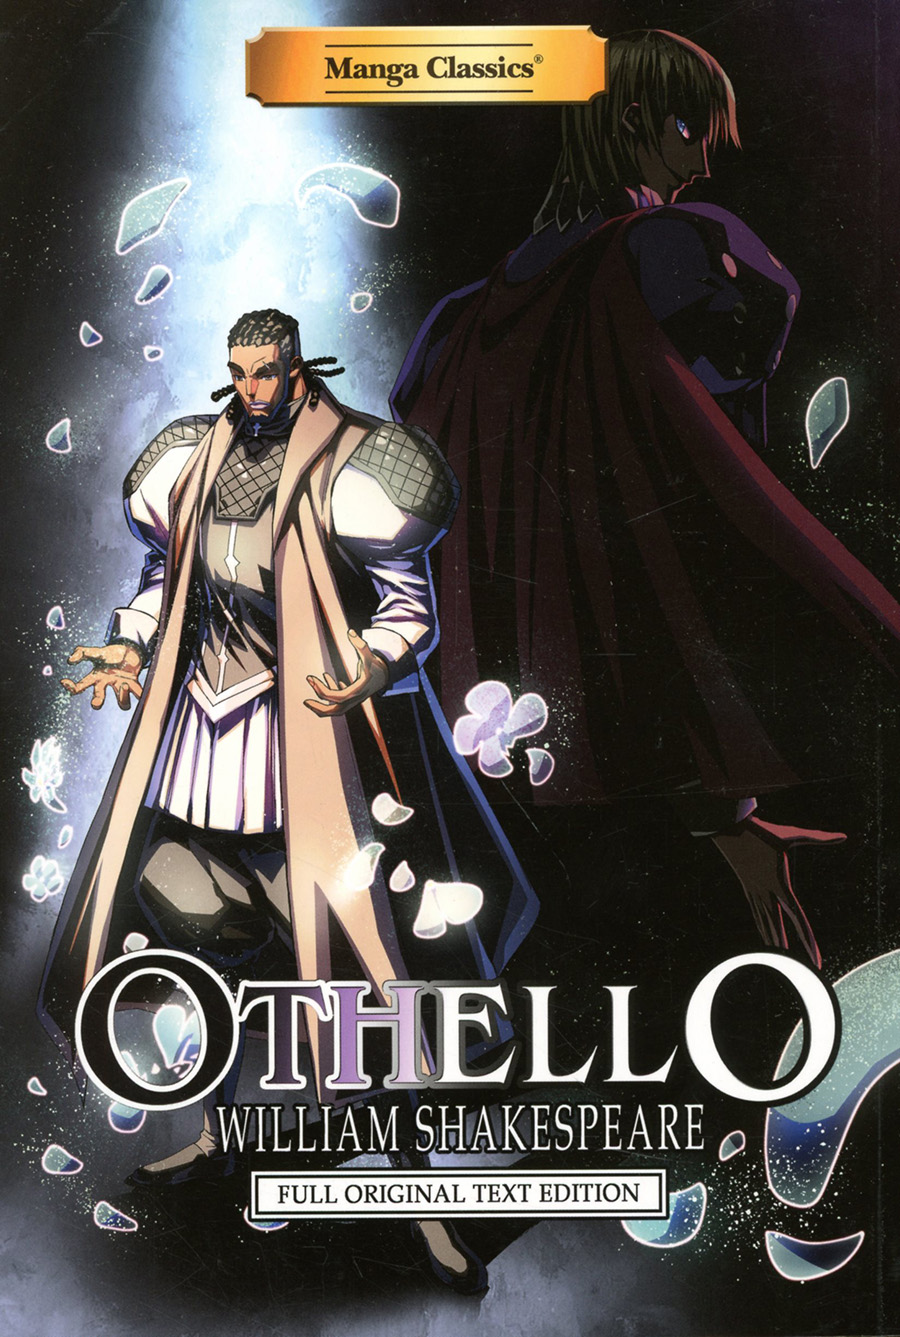 Manga Classics Othello TP